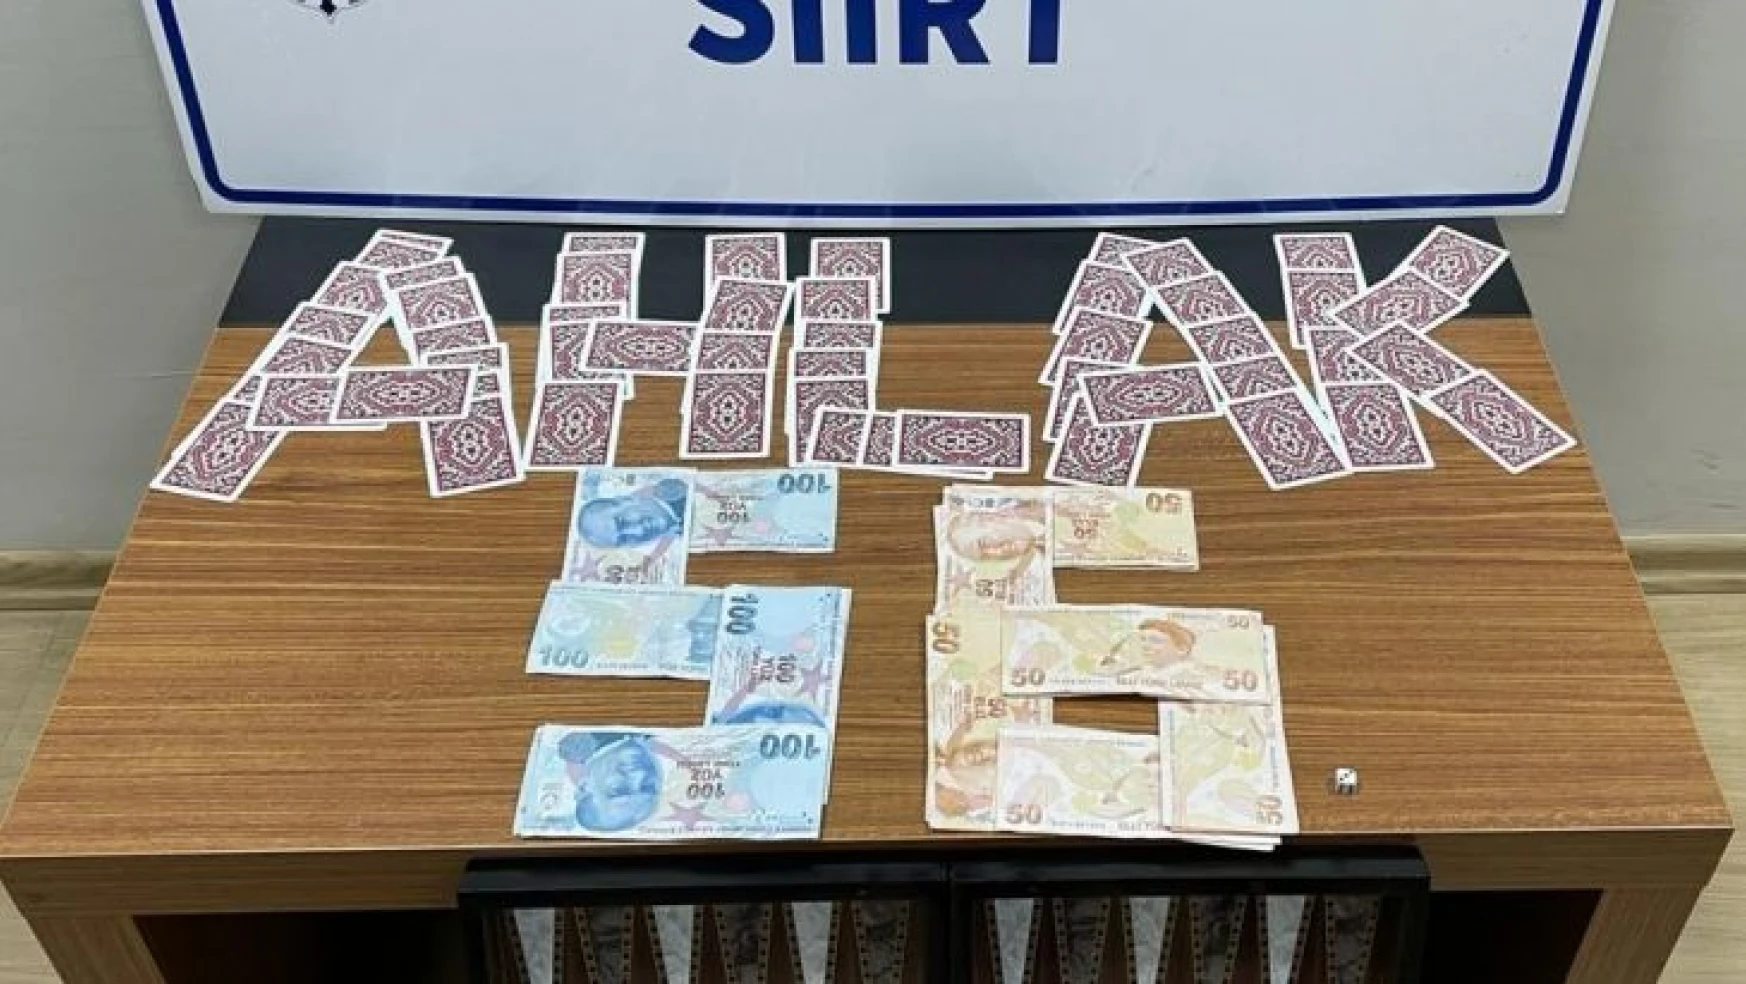 Siirt'te kumar oynayan 5 şahsa 9 bin 95 TL para cezası